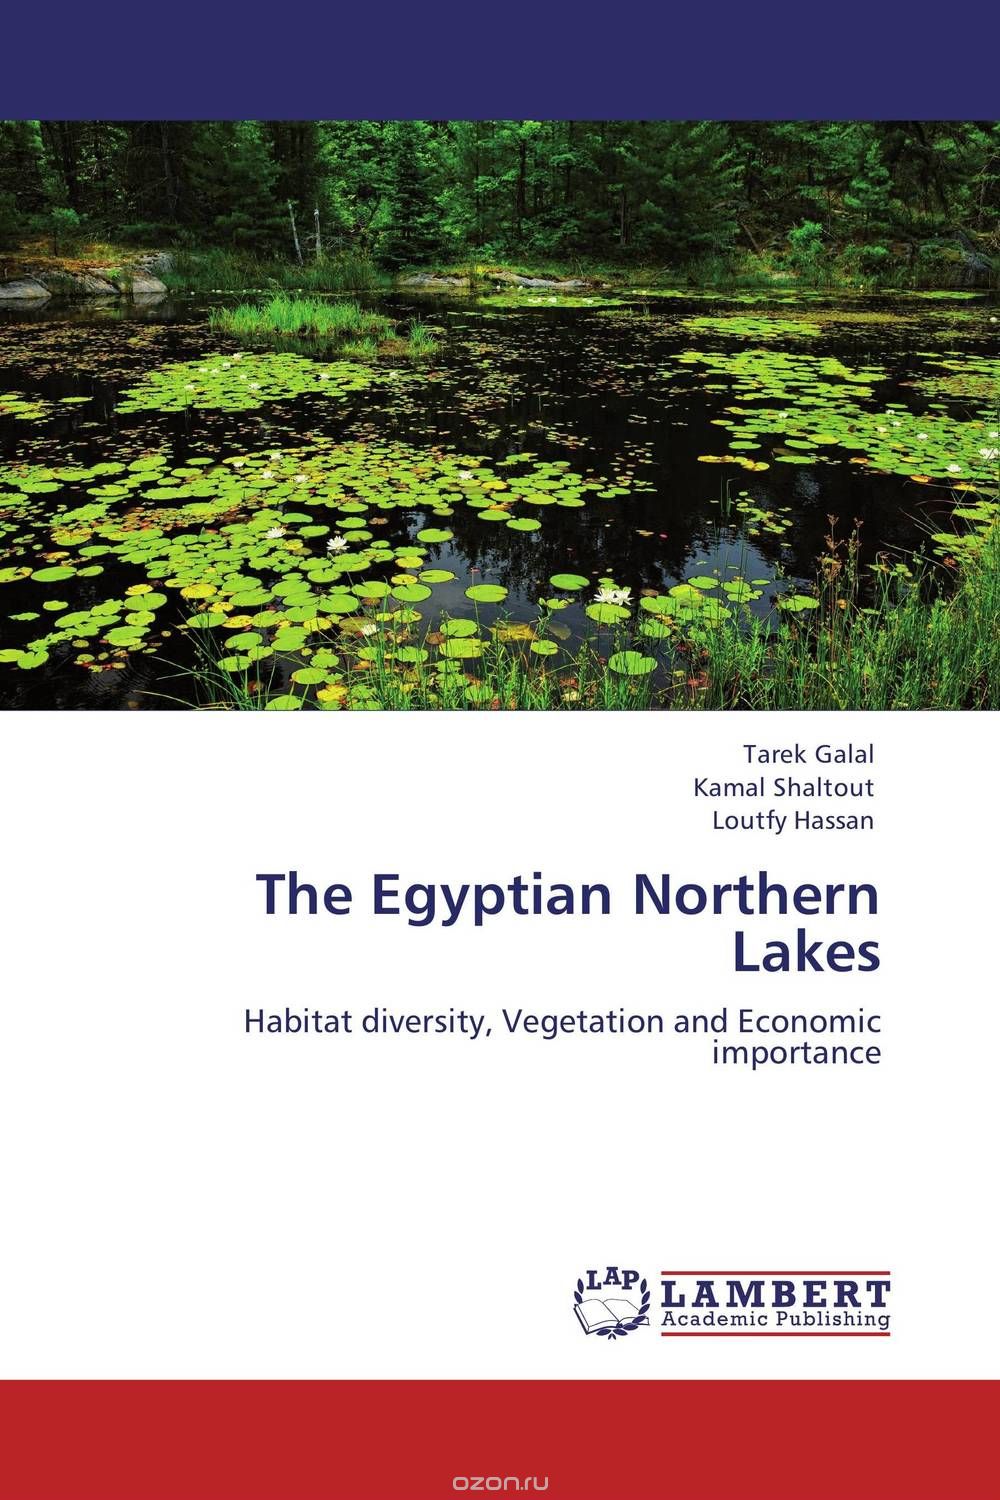 Скачать книгу "The Egyptian Northern Lakes"